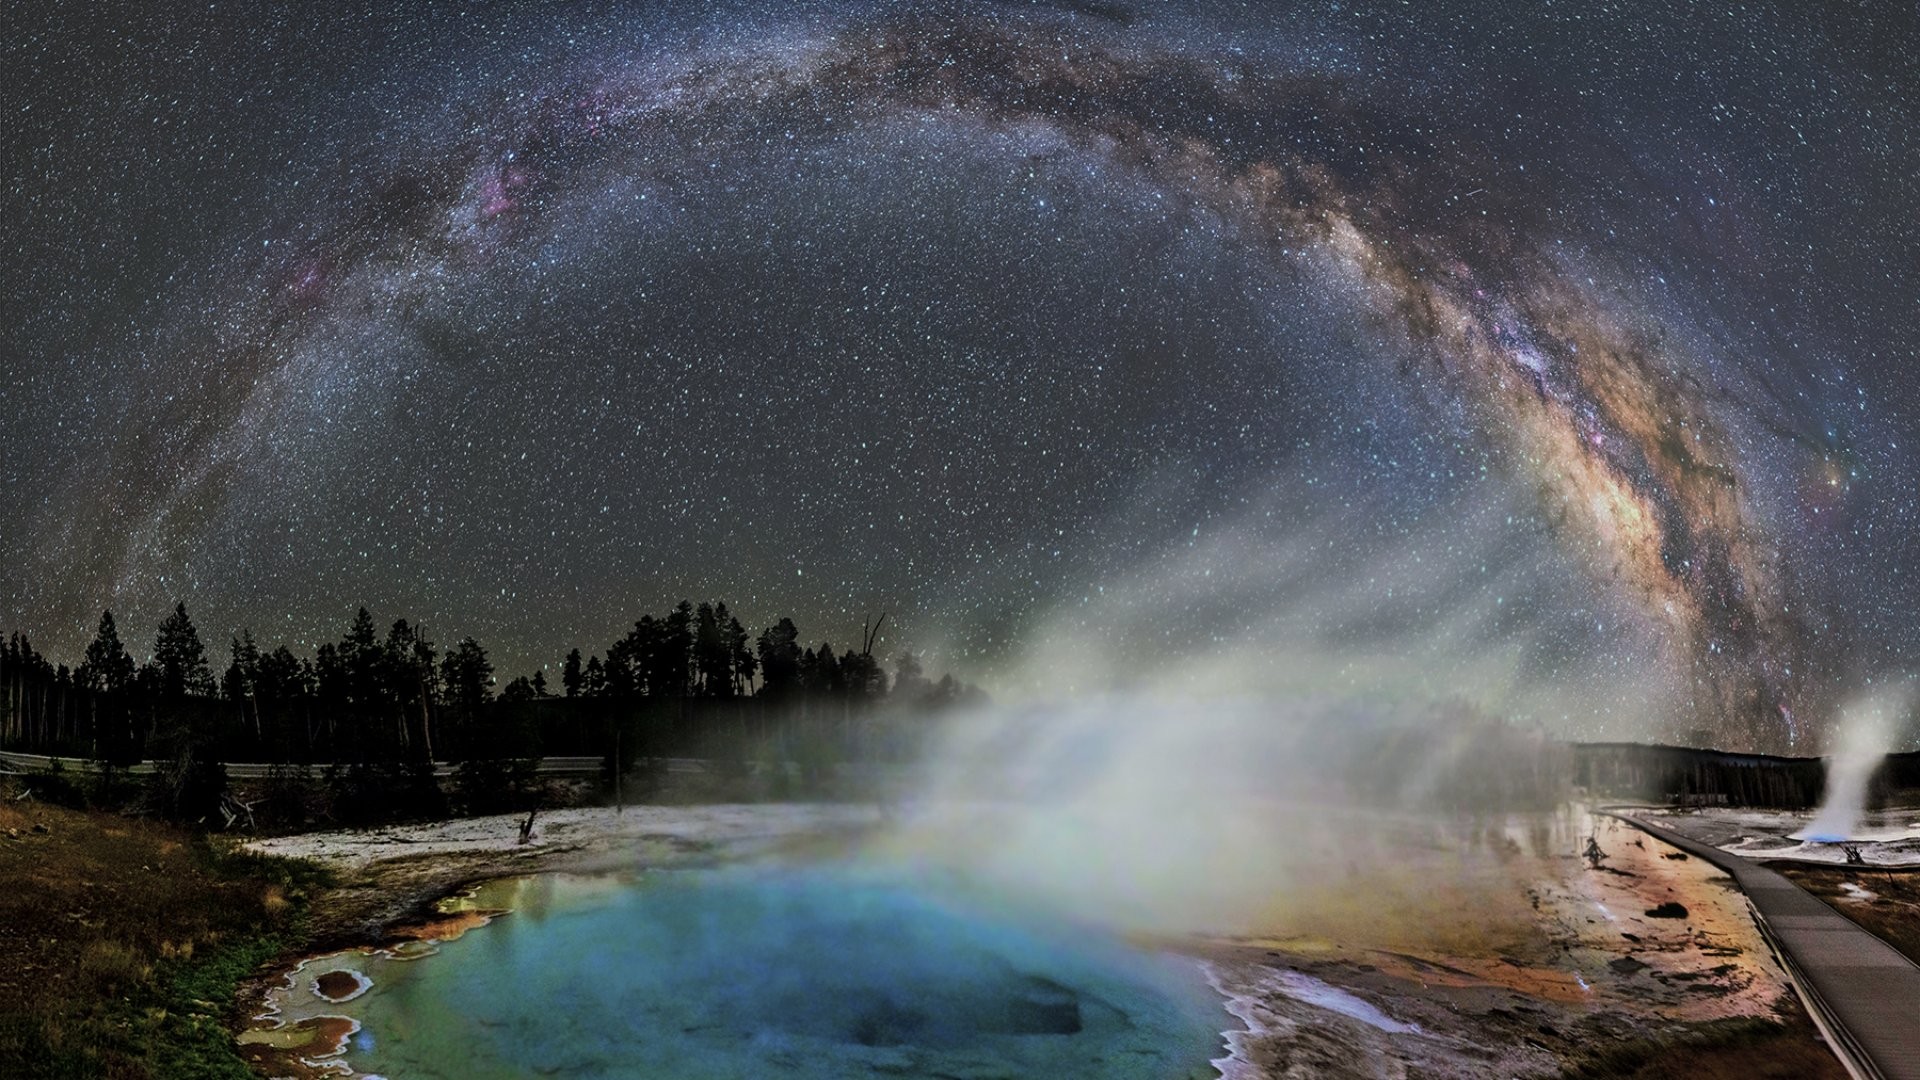 General 1920x1080 NASA stars sky planet galaxy science Milky Way nature digital art water outdoors